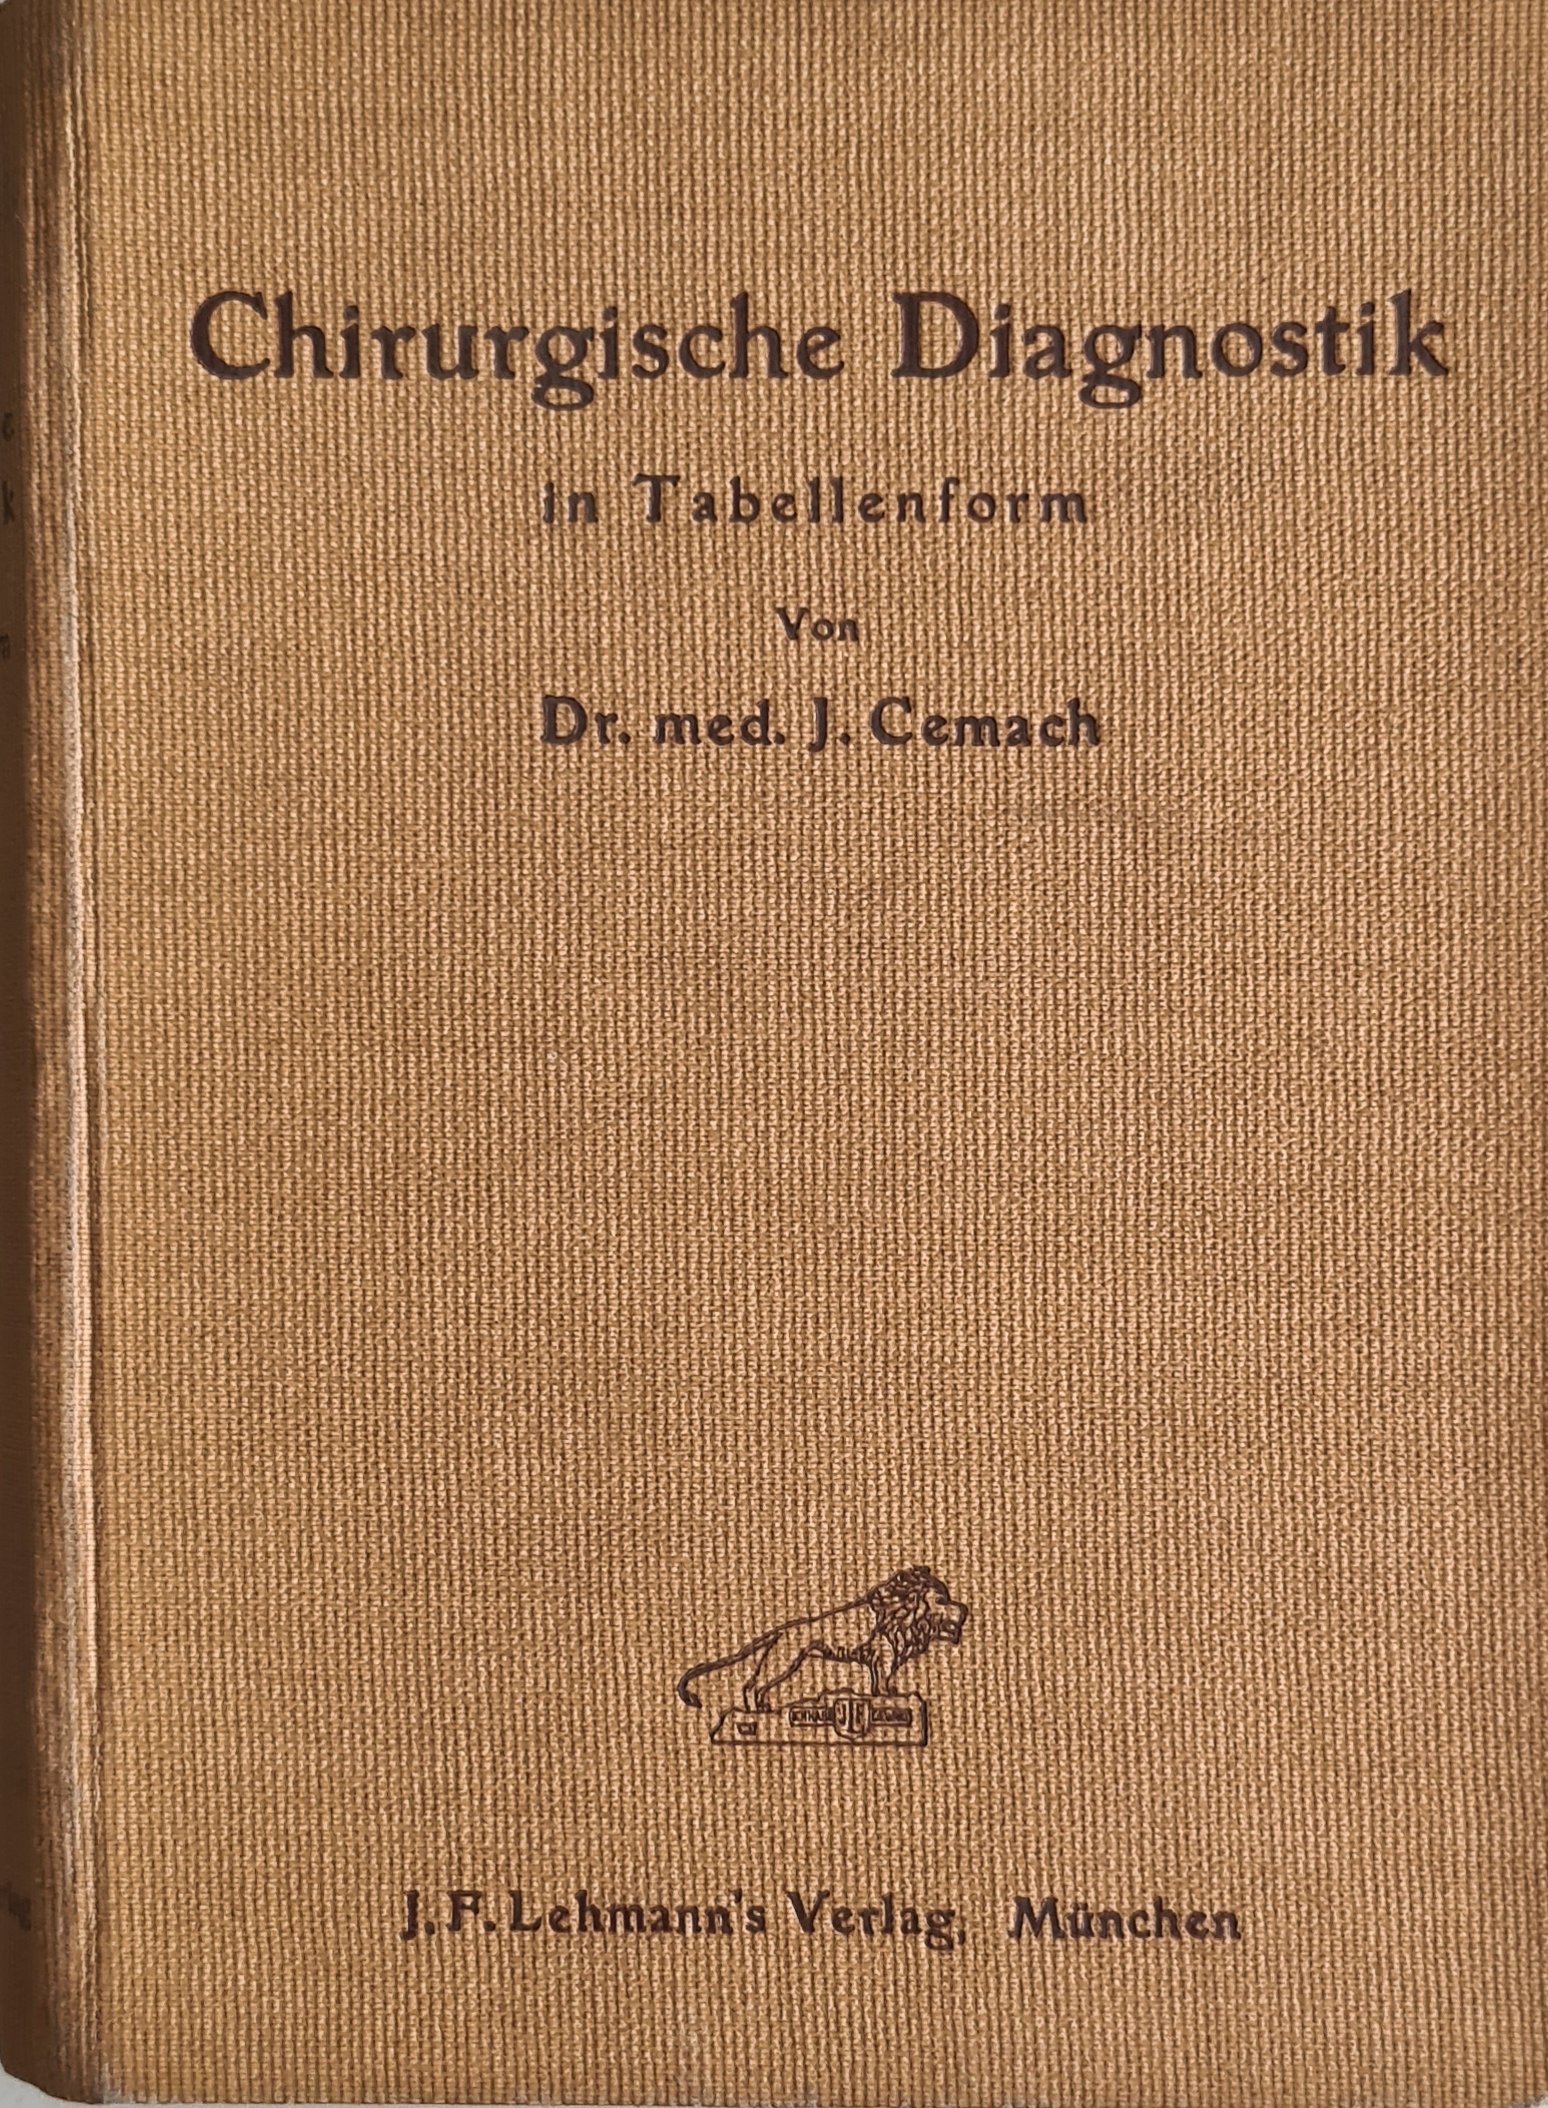 Chirurgische Diagnostik in Tabellenform (Krankenhausmuseum Bielefeld e.V. CC BY-NC-SA)